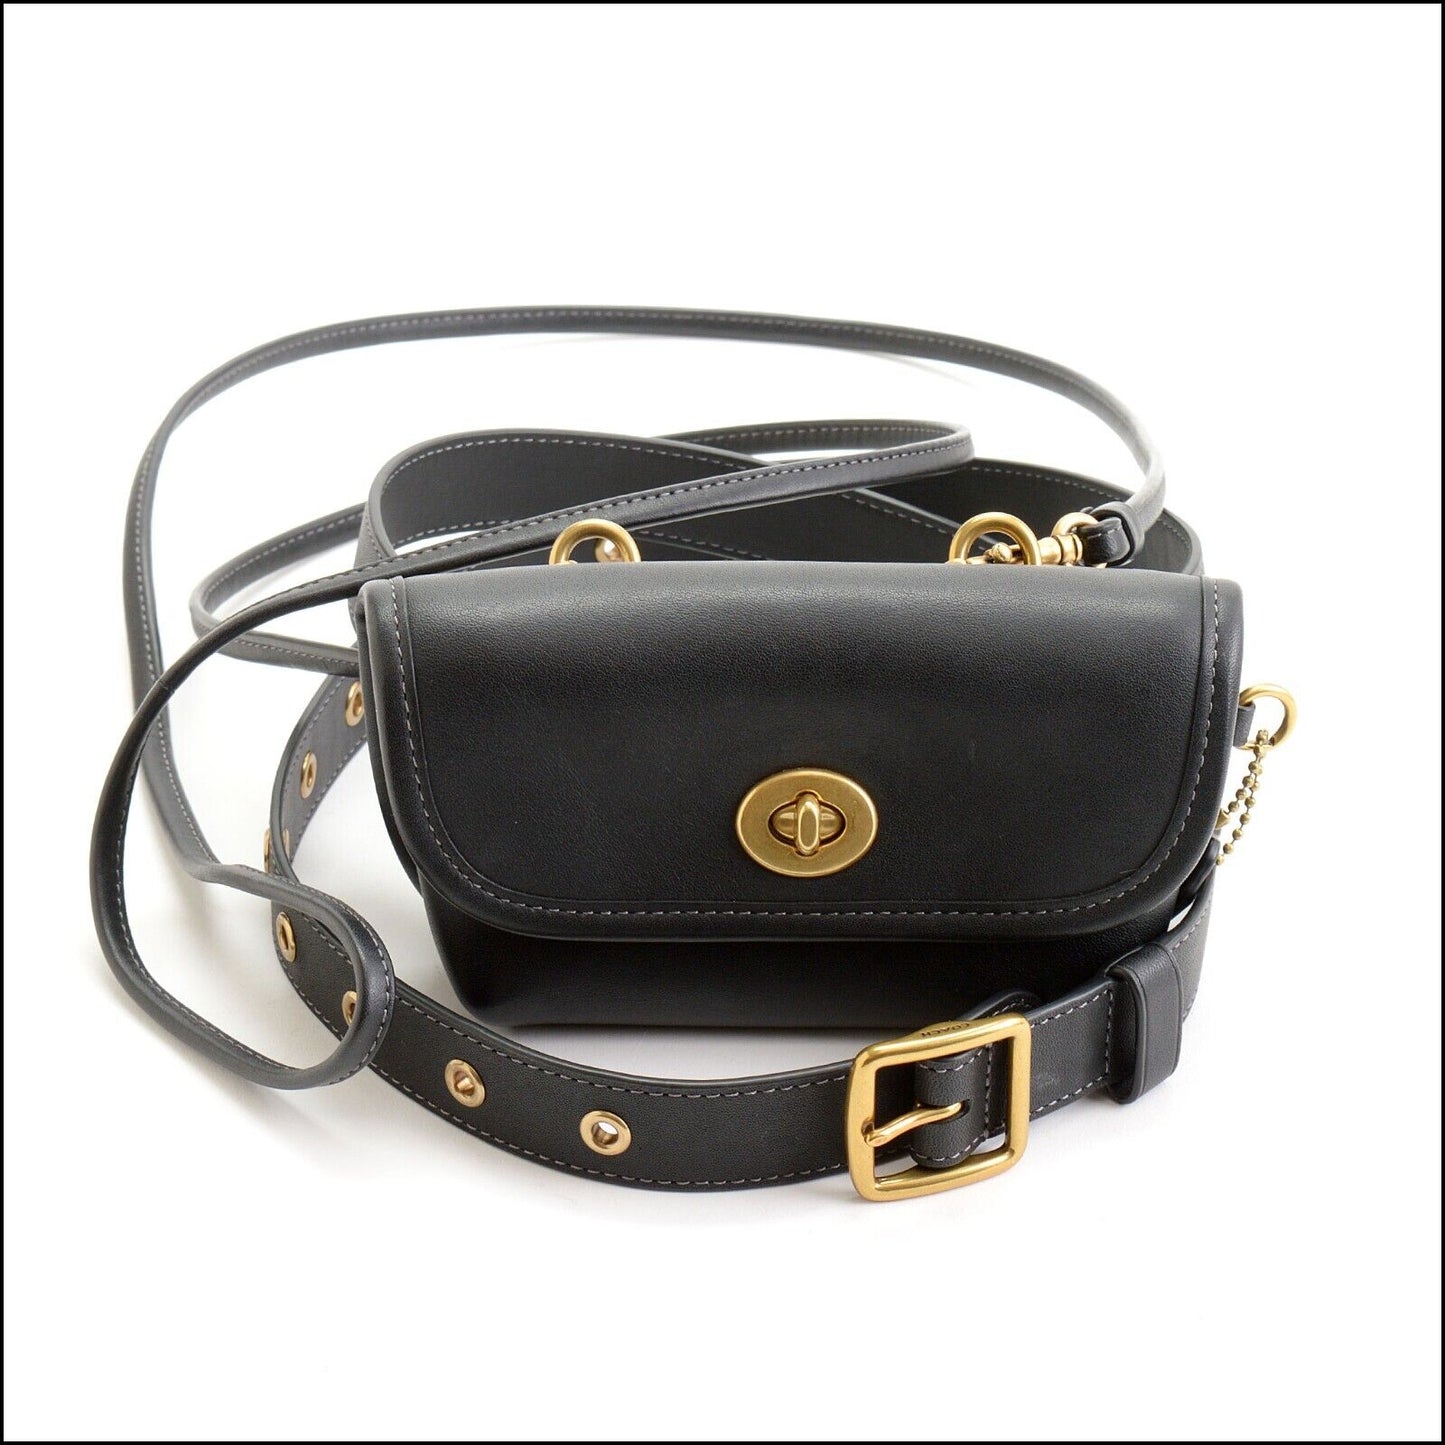 RDC13655 Authentic COACH Black GloveTanned Leather Crossbody Belt Bag